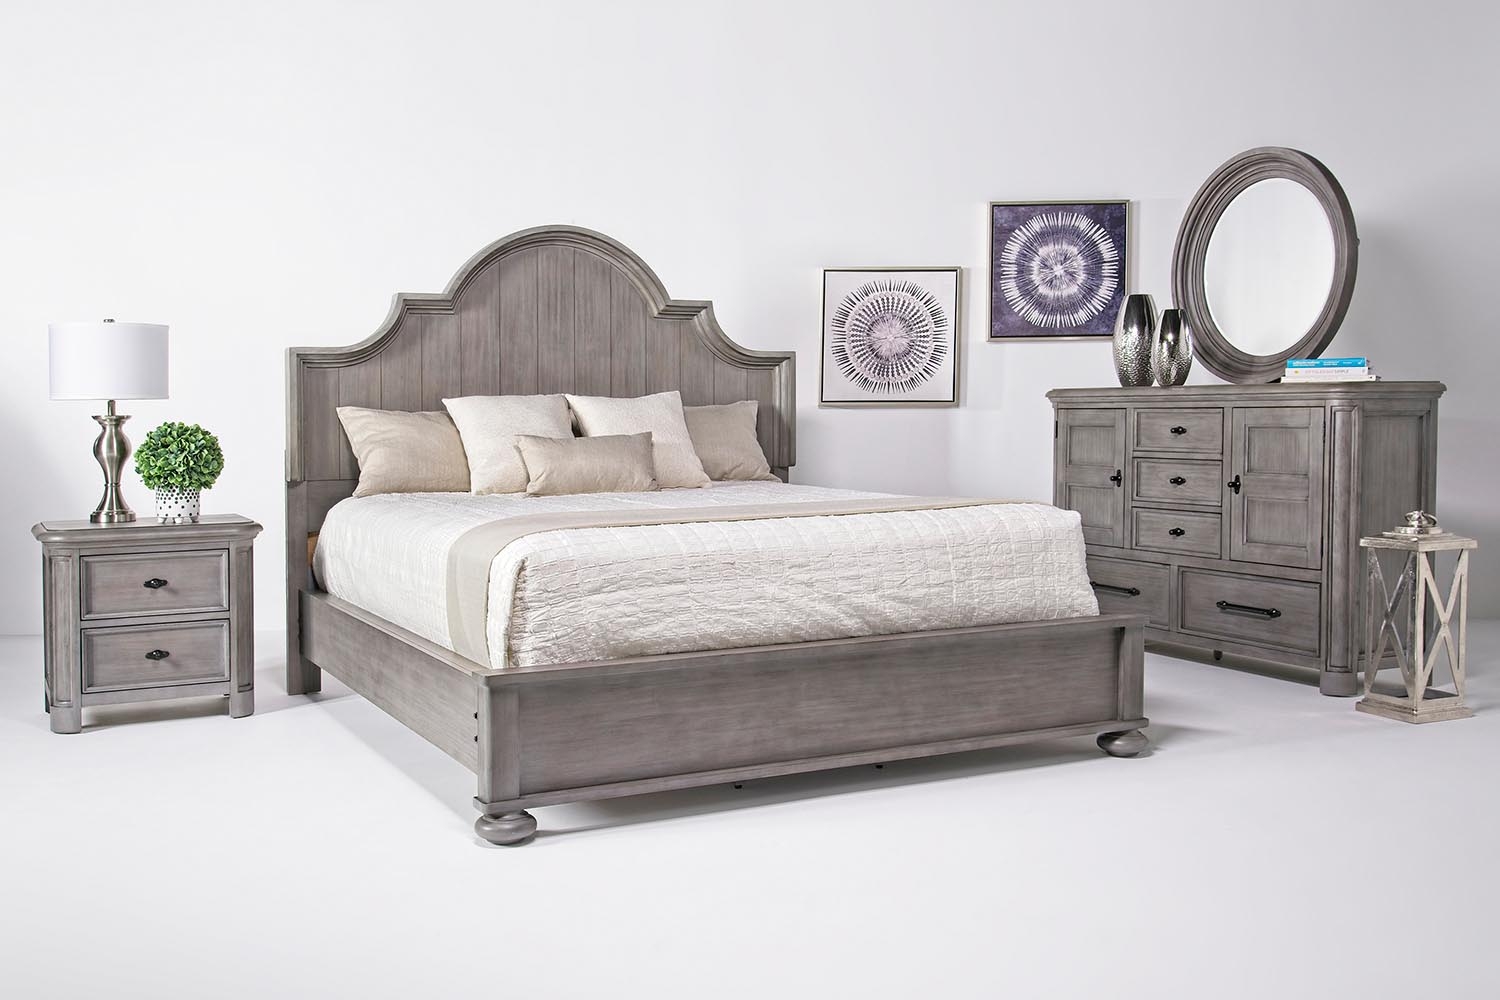 cassandra saari recommends elina bedroom furniture set pic